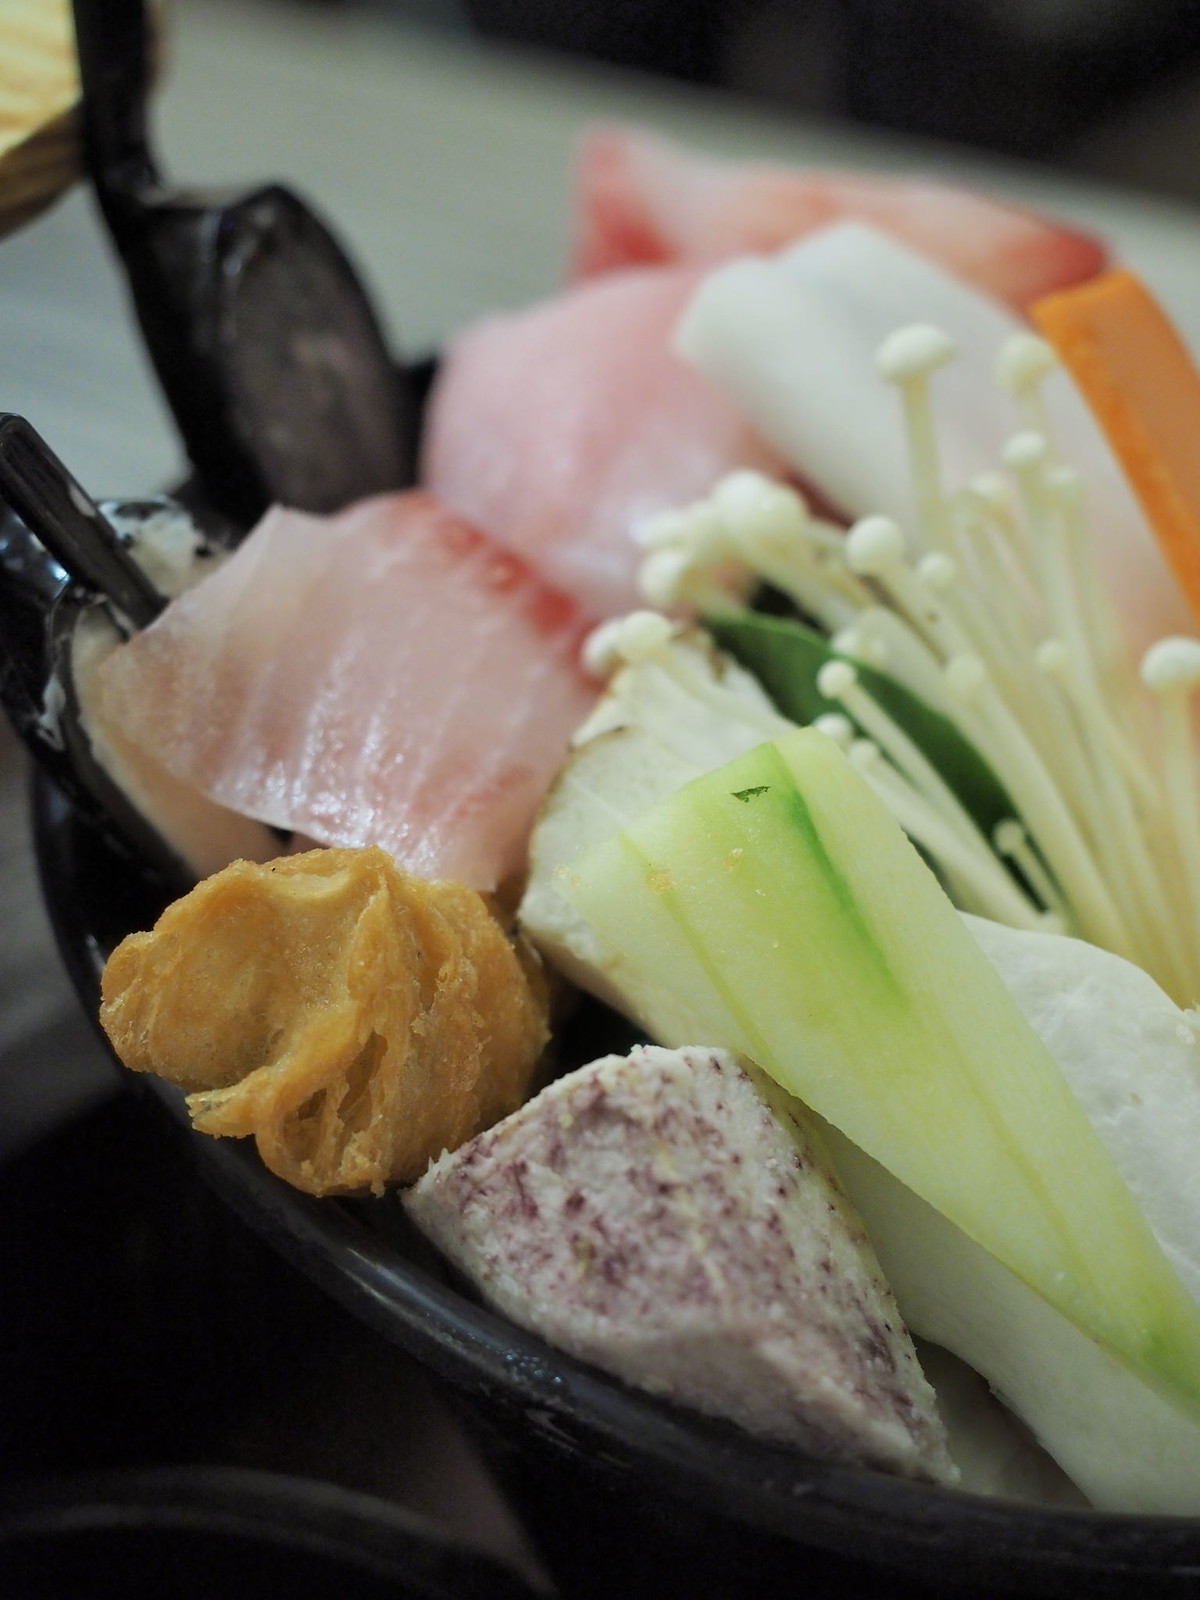 More ingredients such as fish slice, yam, enoki mushroom and cucumber